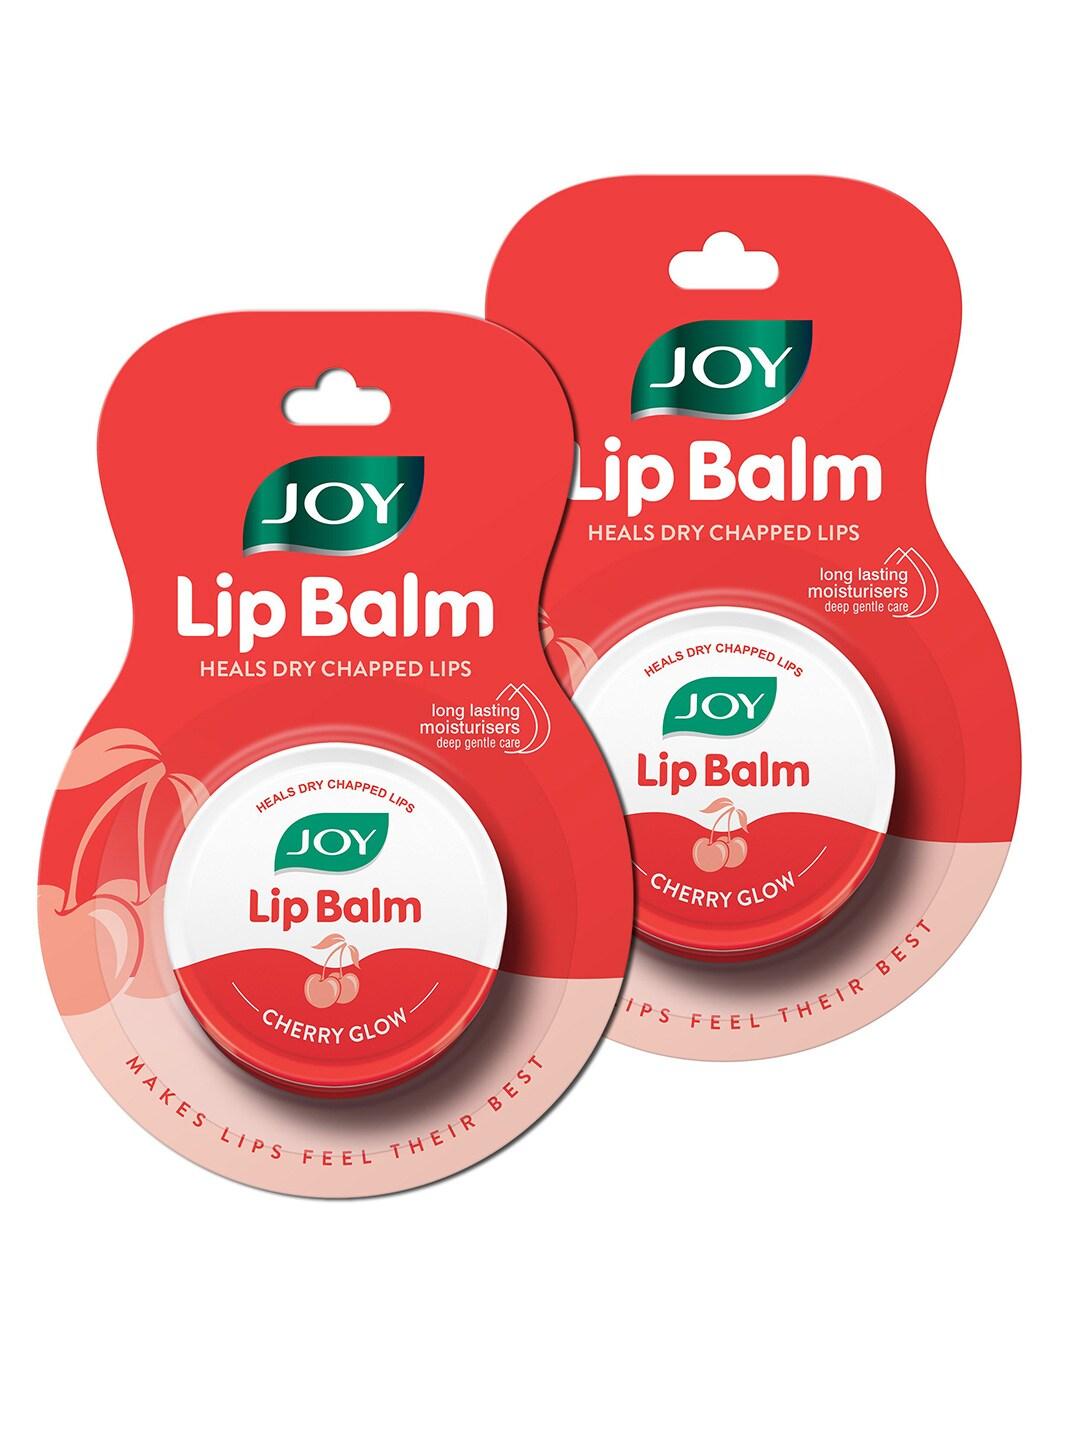 JOY Set of 2 Long Lasting & Moisturising Lip Balm 18g each - Cherry Glow